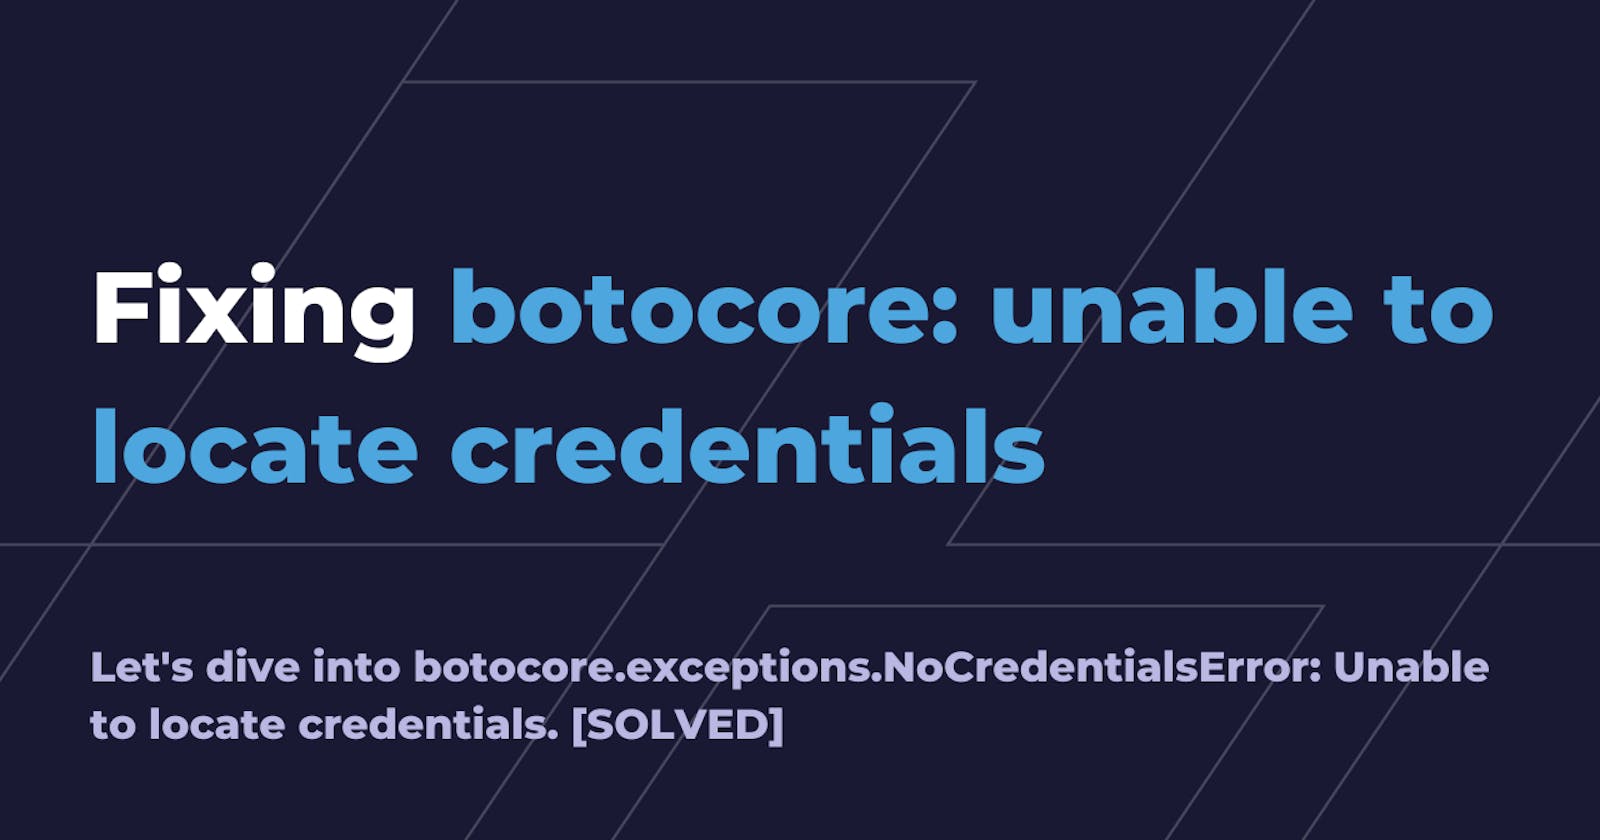 Fixing botocore.exceptions.nocredentialserror: unable to locate credentials [SOLVED]